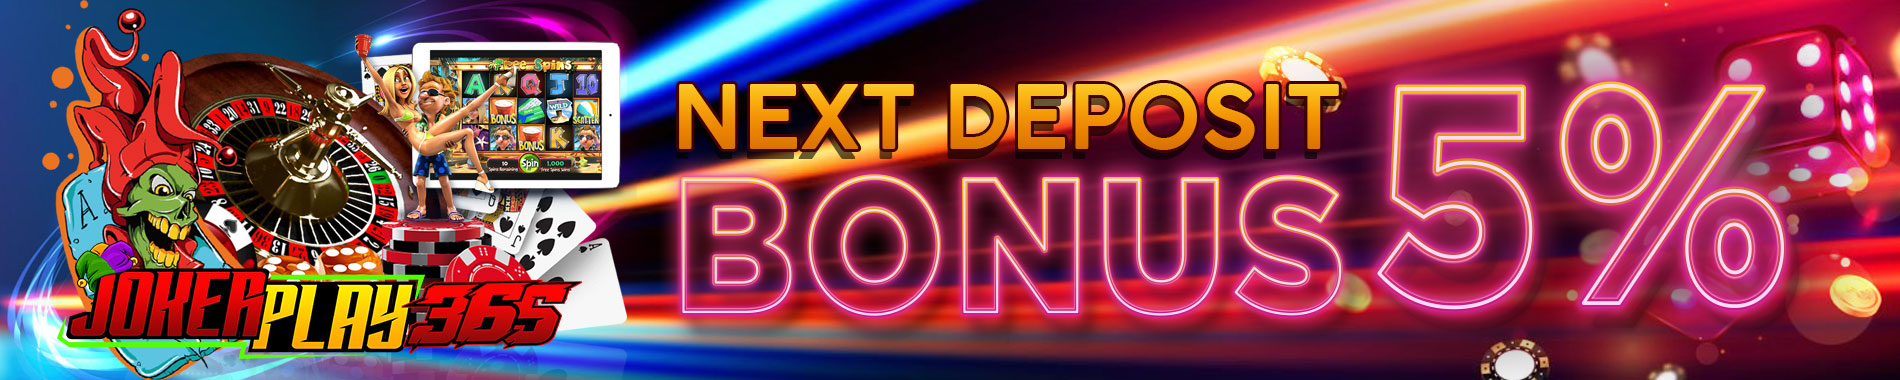 Bonus Next Deposit 10% TO x 3